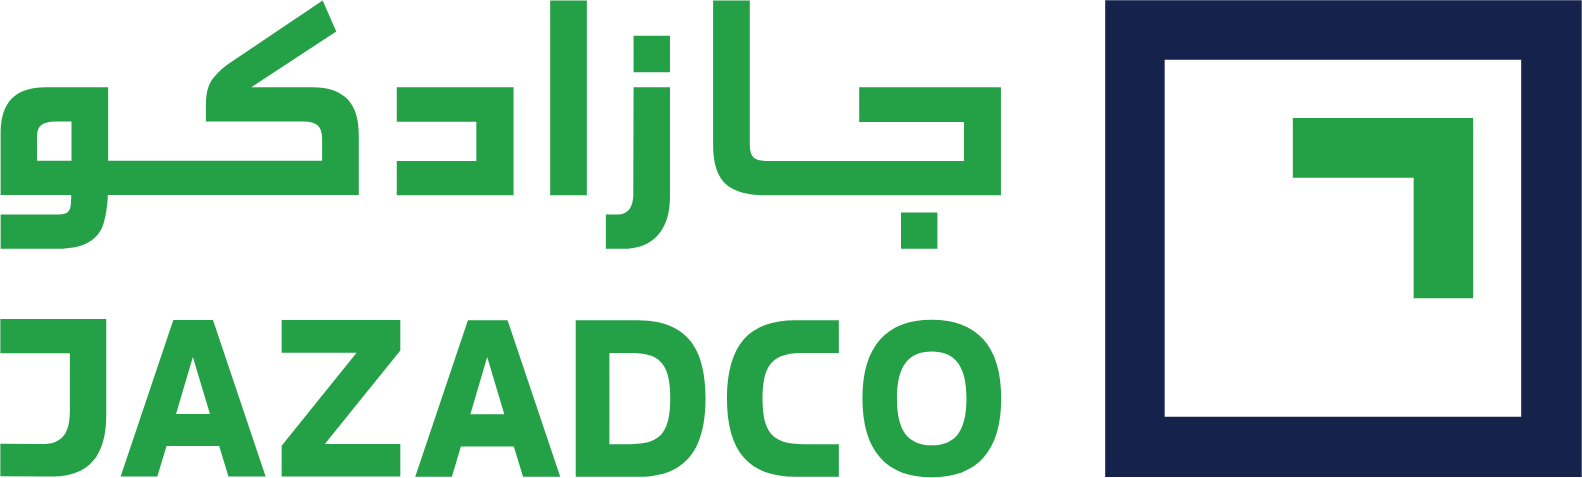 Jazan Development and Investment (JAZADCO)  logo large (transparent PNG)